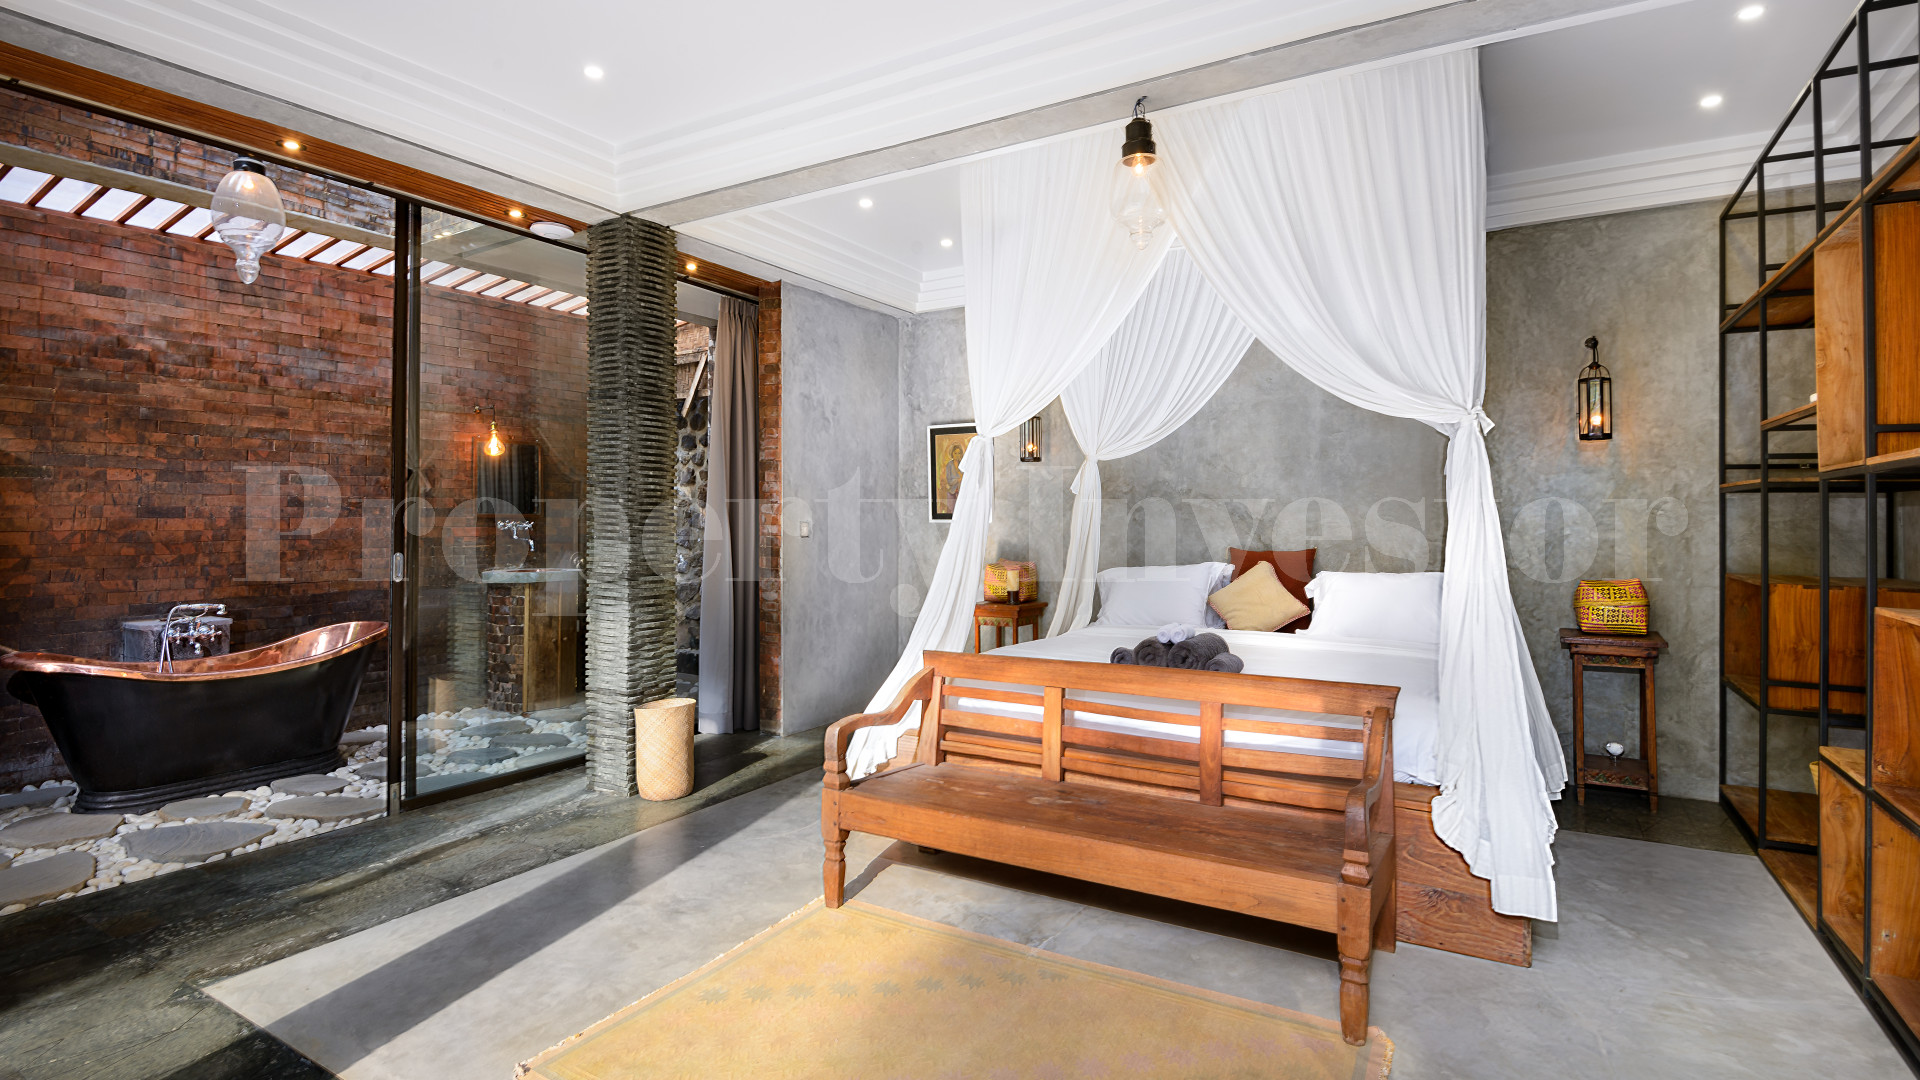 4 Bedroom Designer Villa in Exclusive Community in Mas-Ubud, Bali